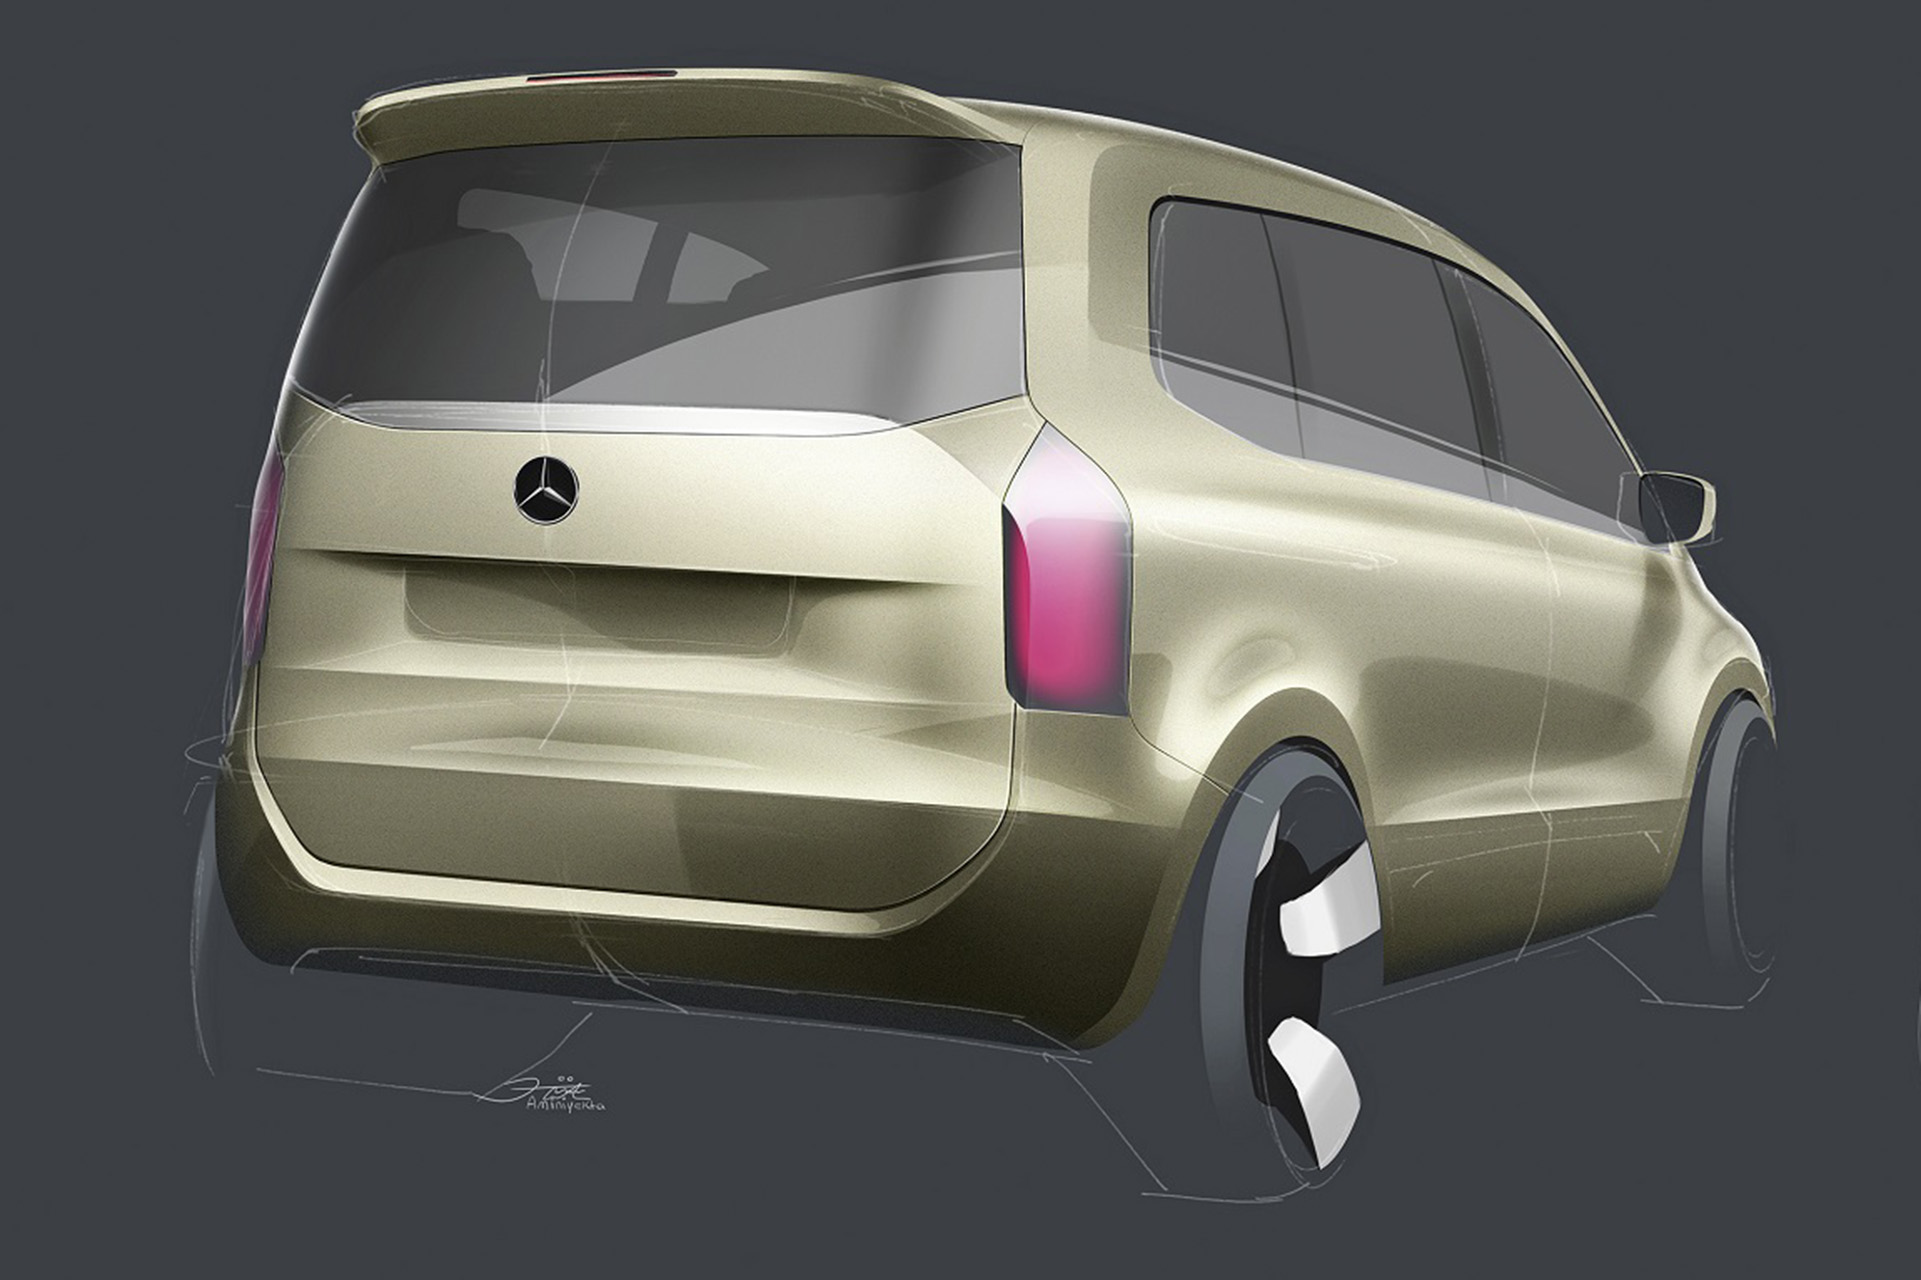 2022 Mercedes-Benz Citan Design Sketch Wallpapers #105 of 115